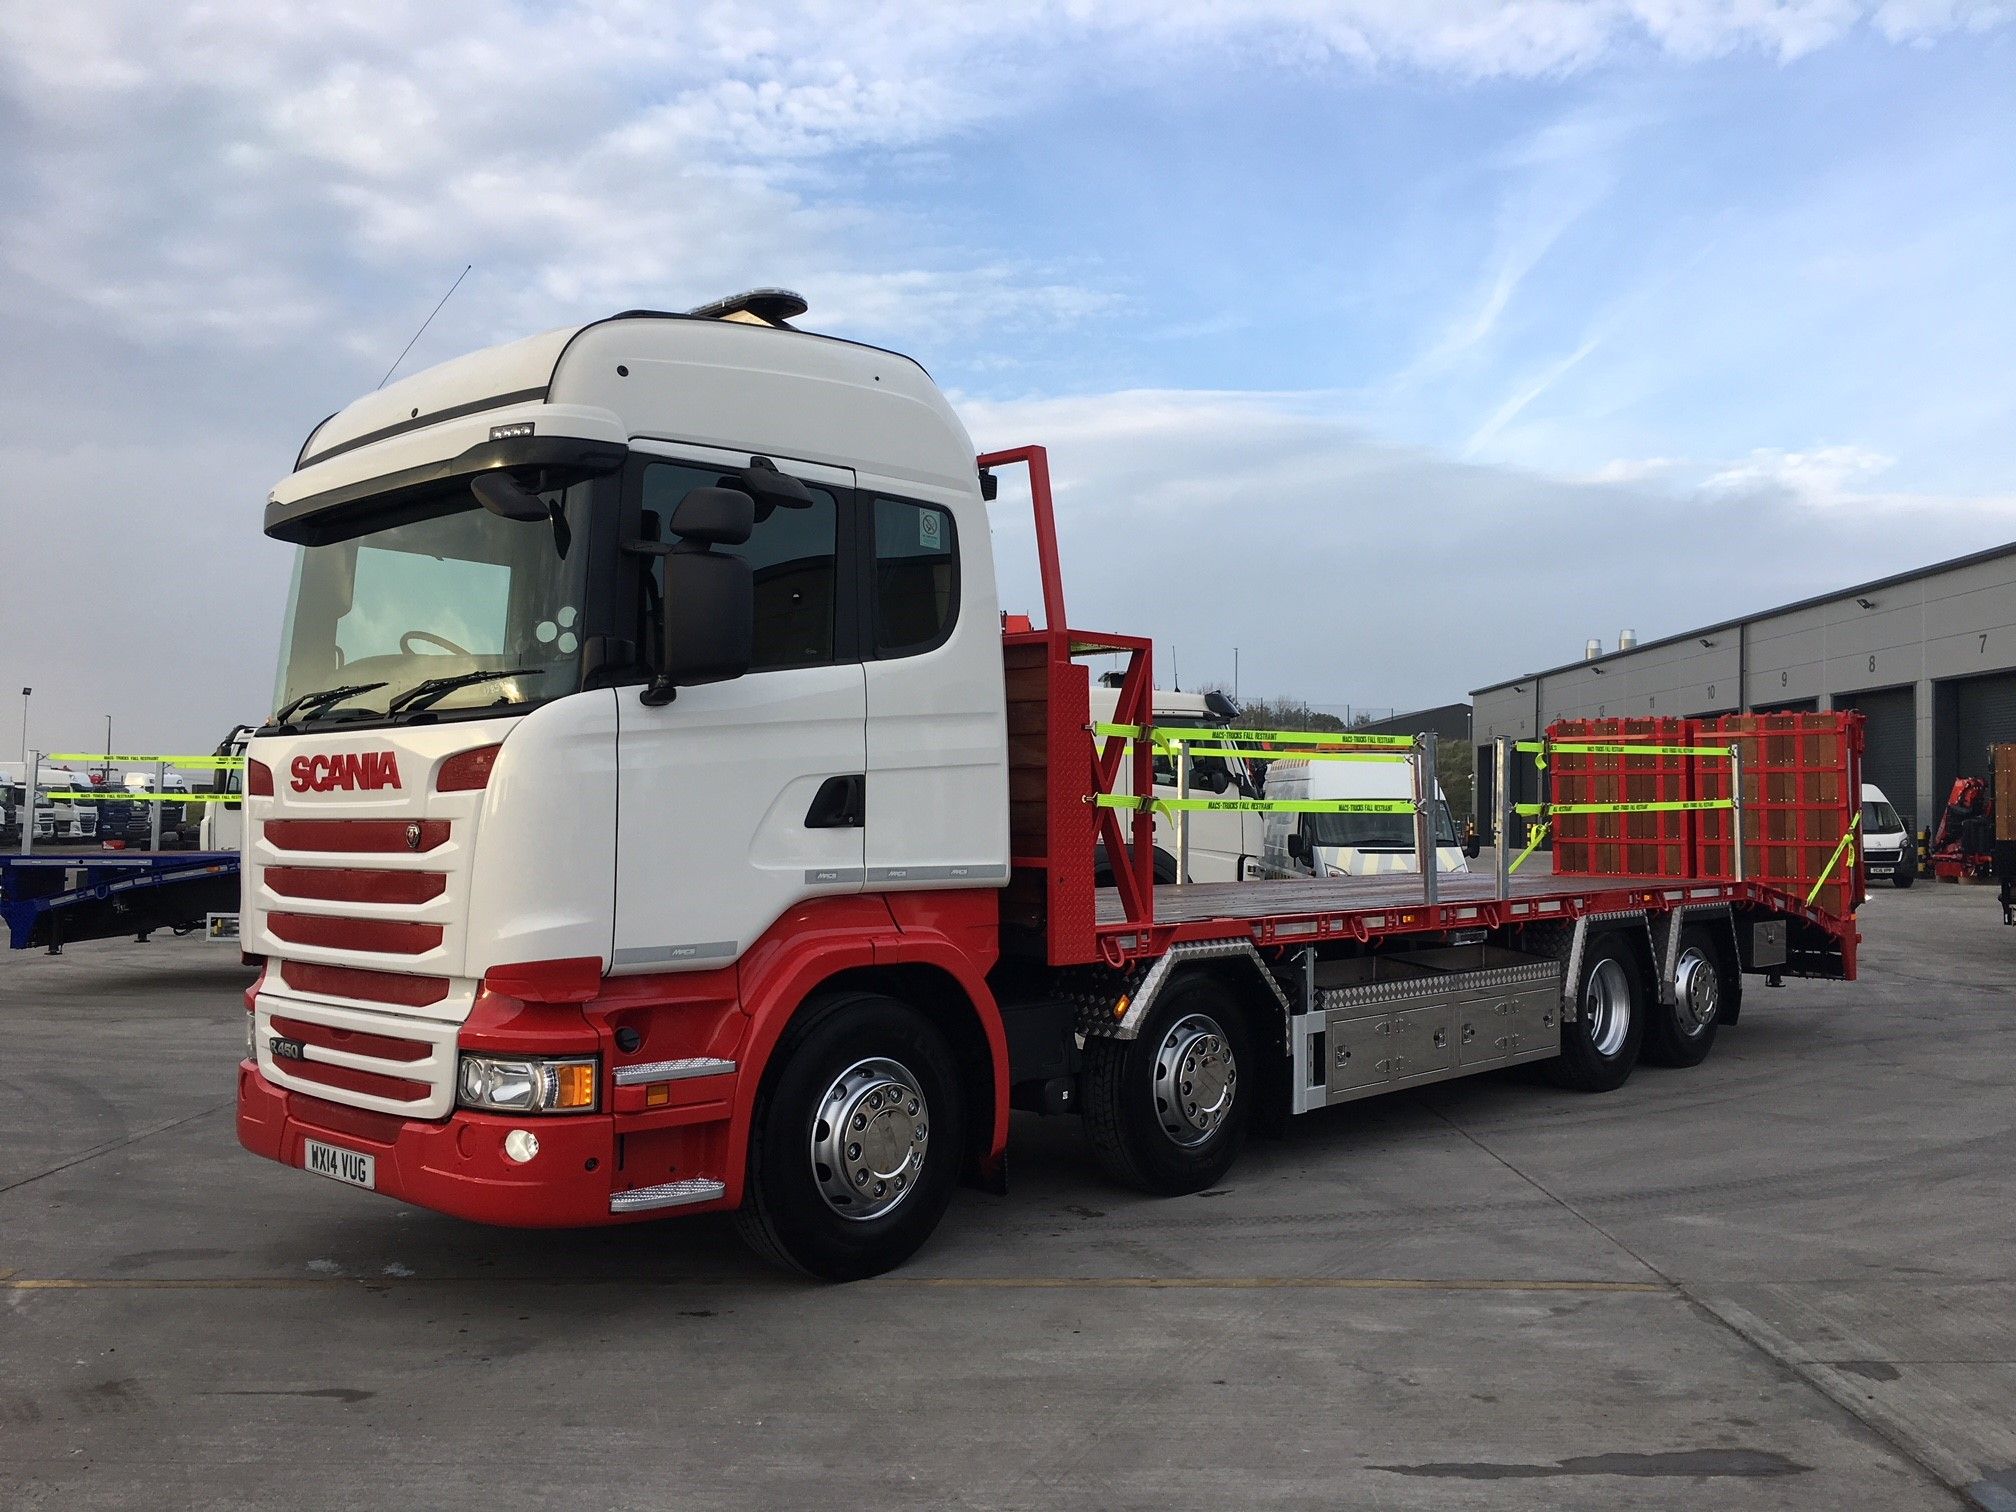 Mark Lawton Ltd take first truck